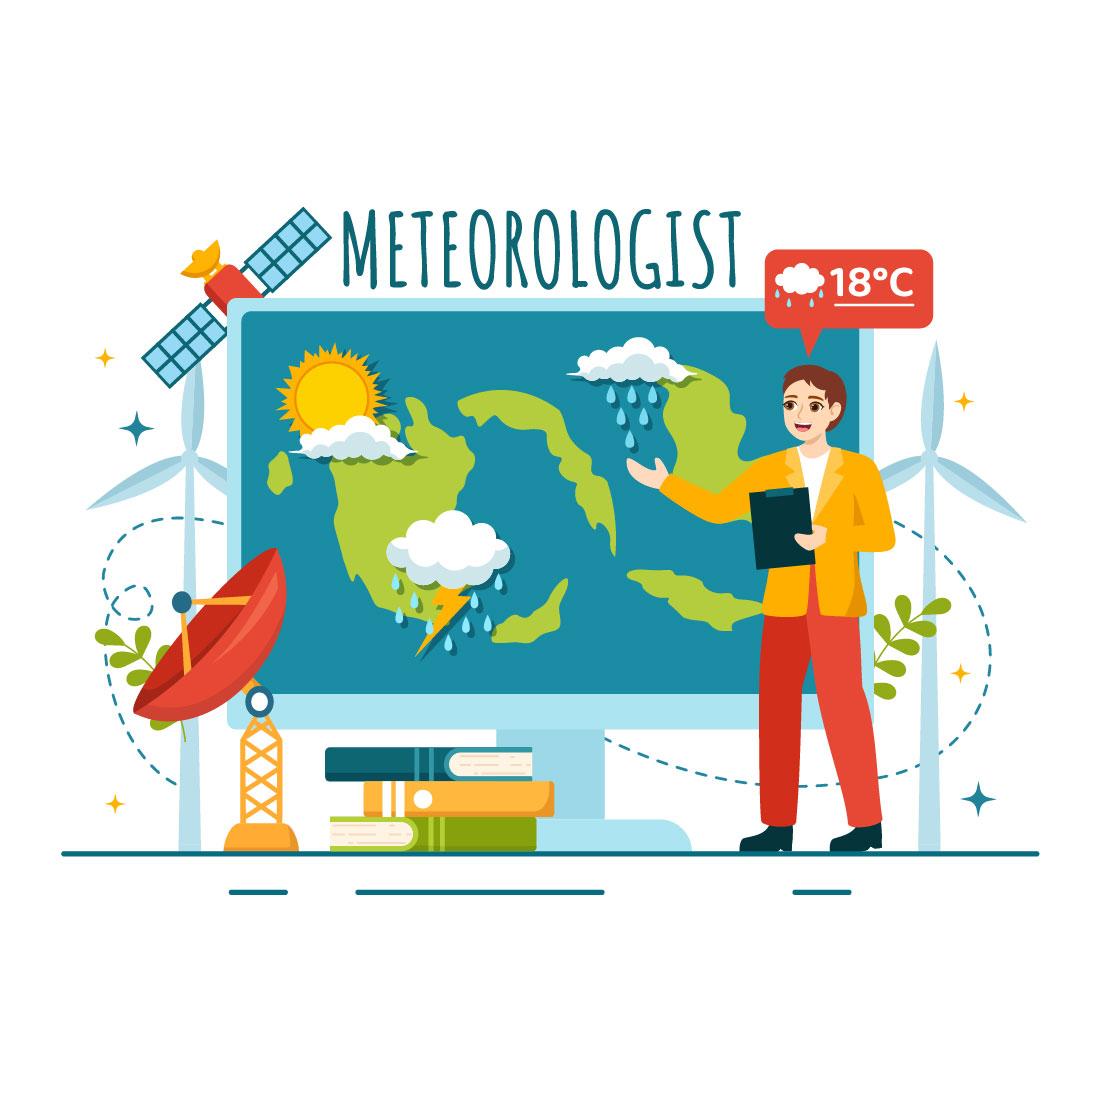 14 Meteorologist Vector Illustration cover image.